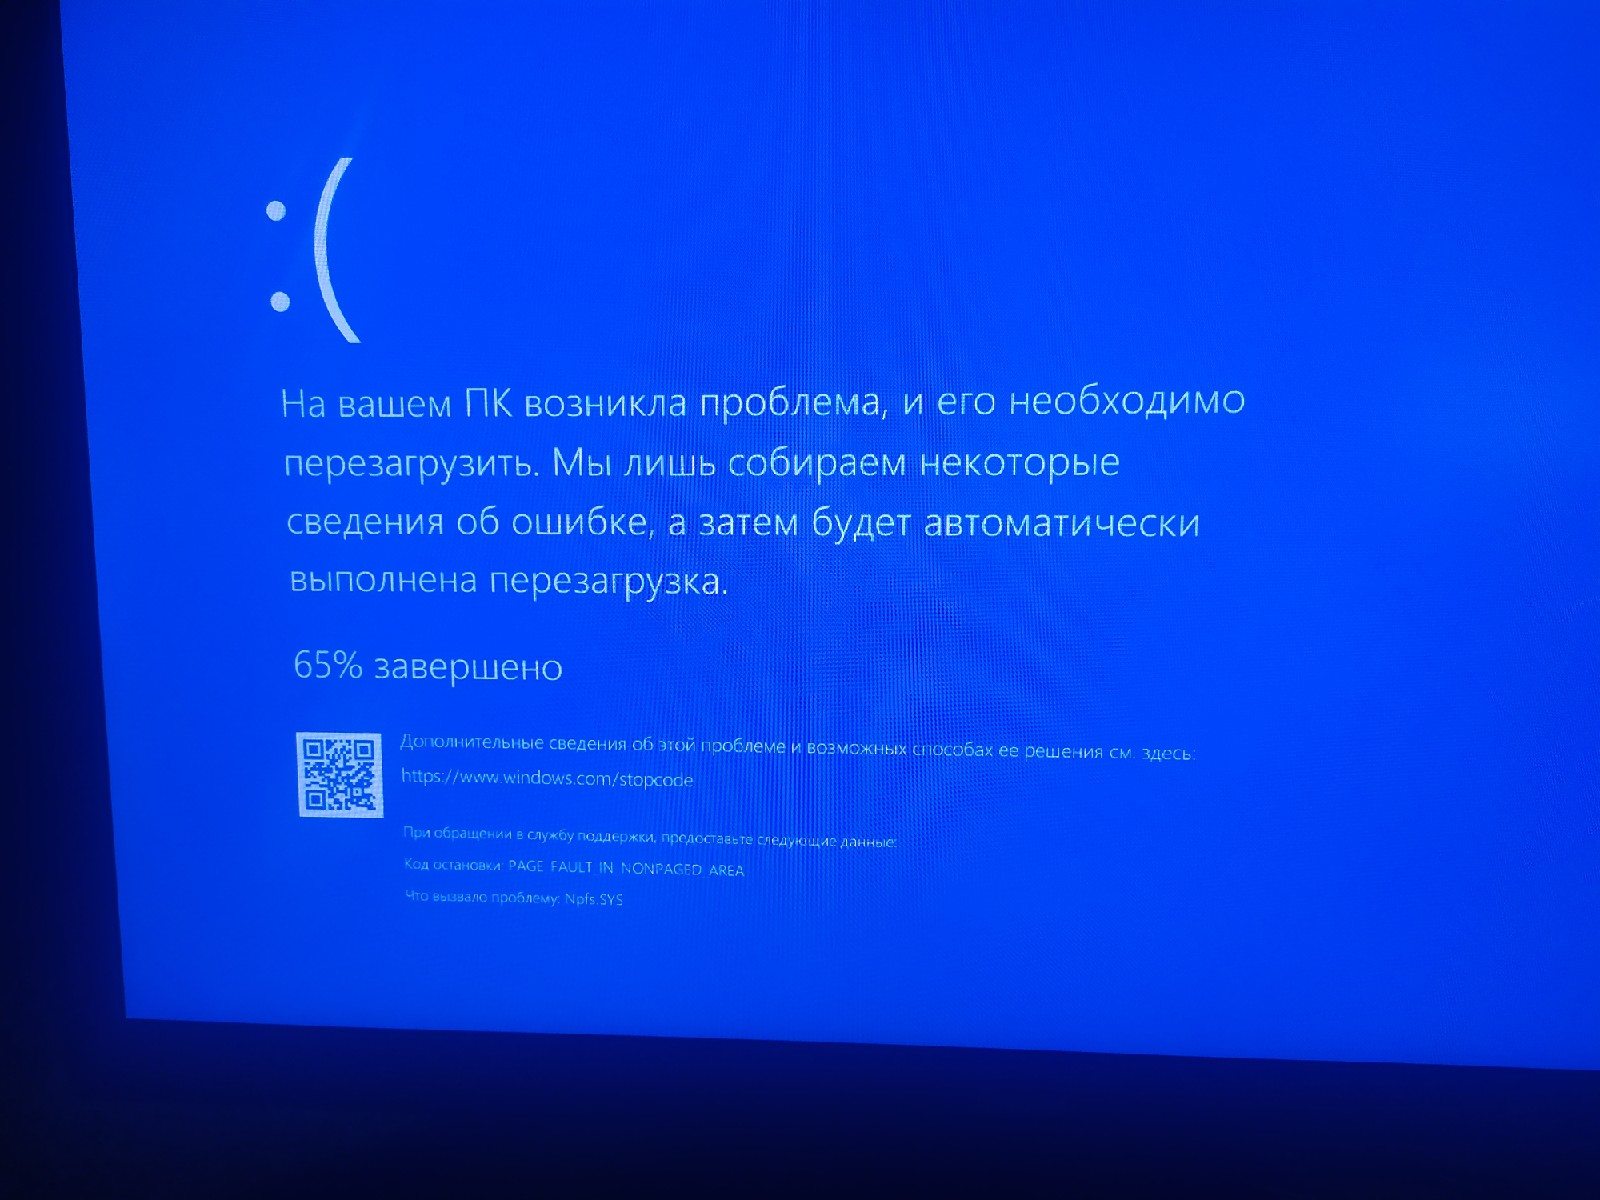 Ошибка page fault in nonpaged. Экран смерти Windows 10. Ошибка синий экран Windows 10. Синий экран смерти Windows 10 видеокарта. Bddci.sys синий экран.